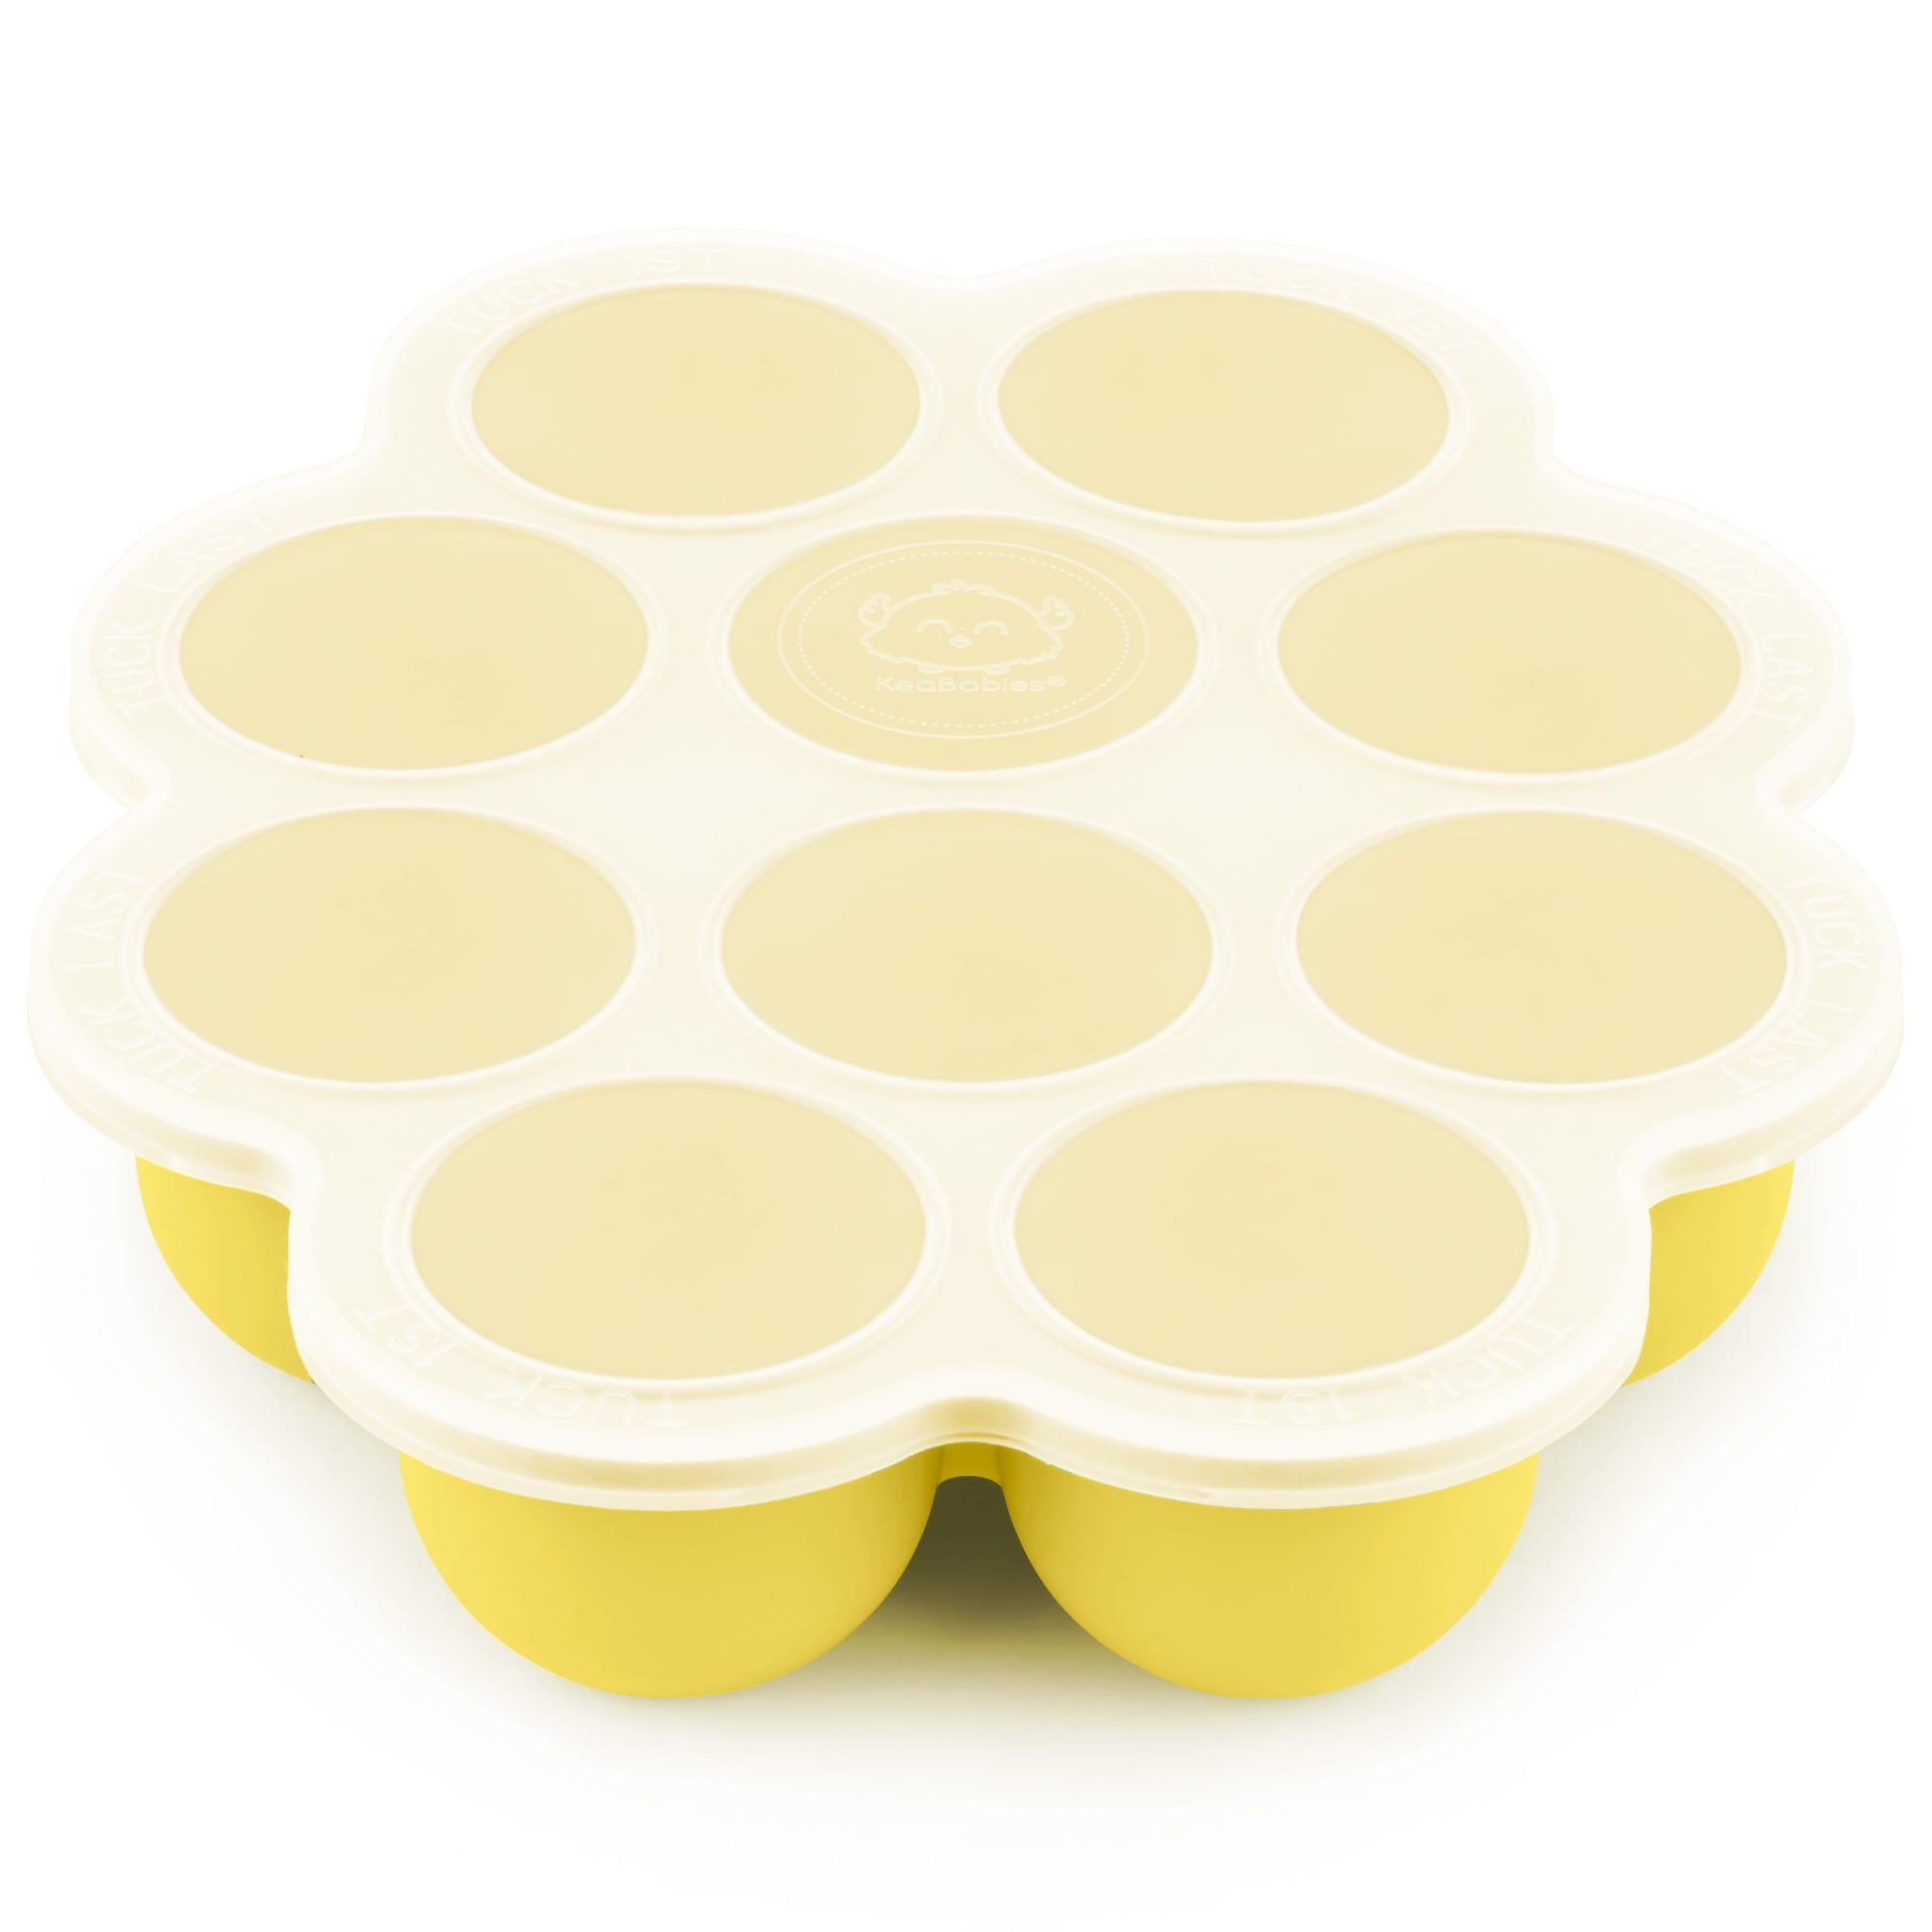 7 Holes Reusable Silicone Baby Food Freezer Tray Crisper Egg Bite